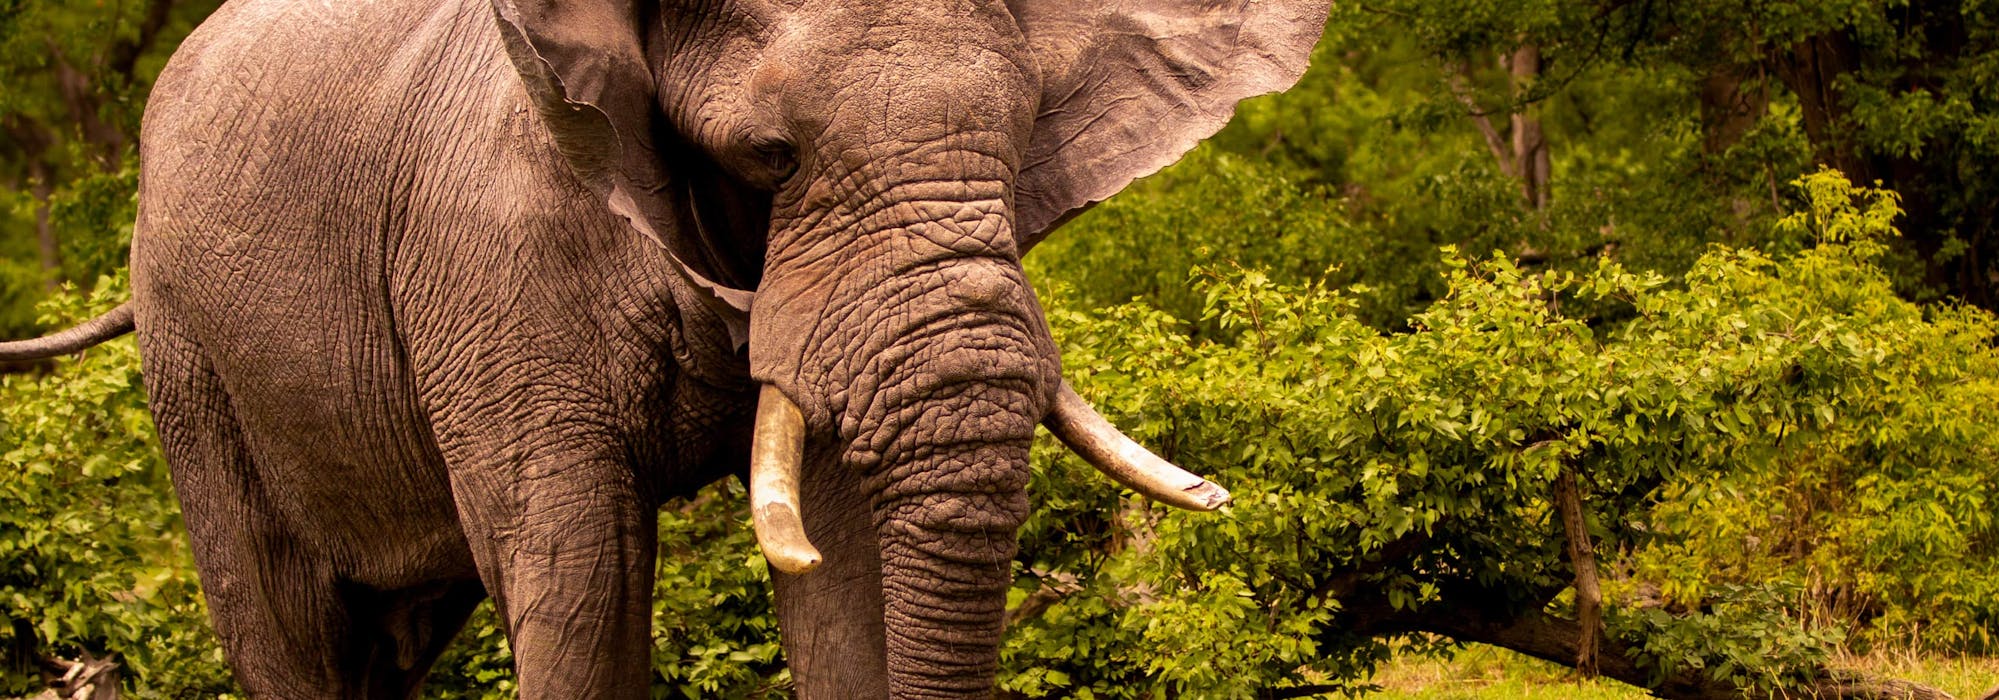 Karl Johan Nils Friberg: Elephant in the Okavango